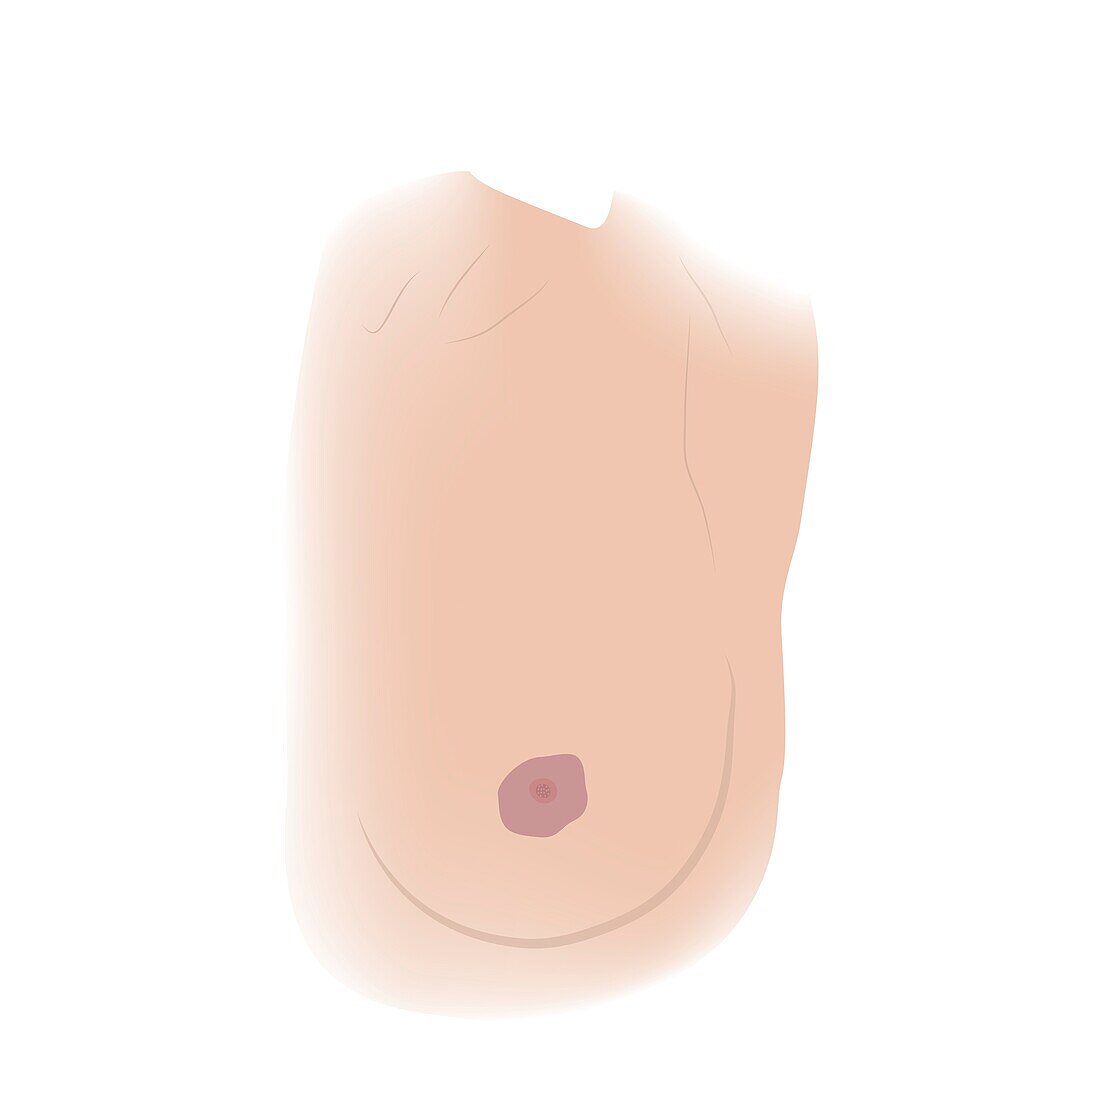 Changes in nipple shape, illustration